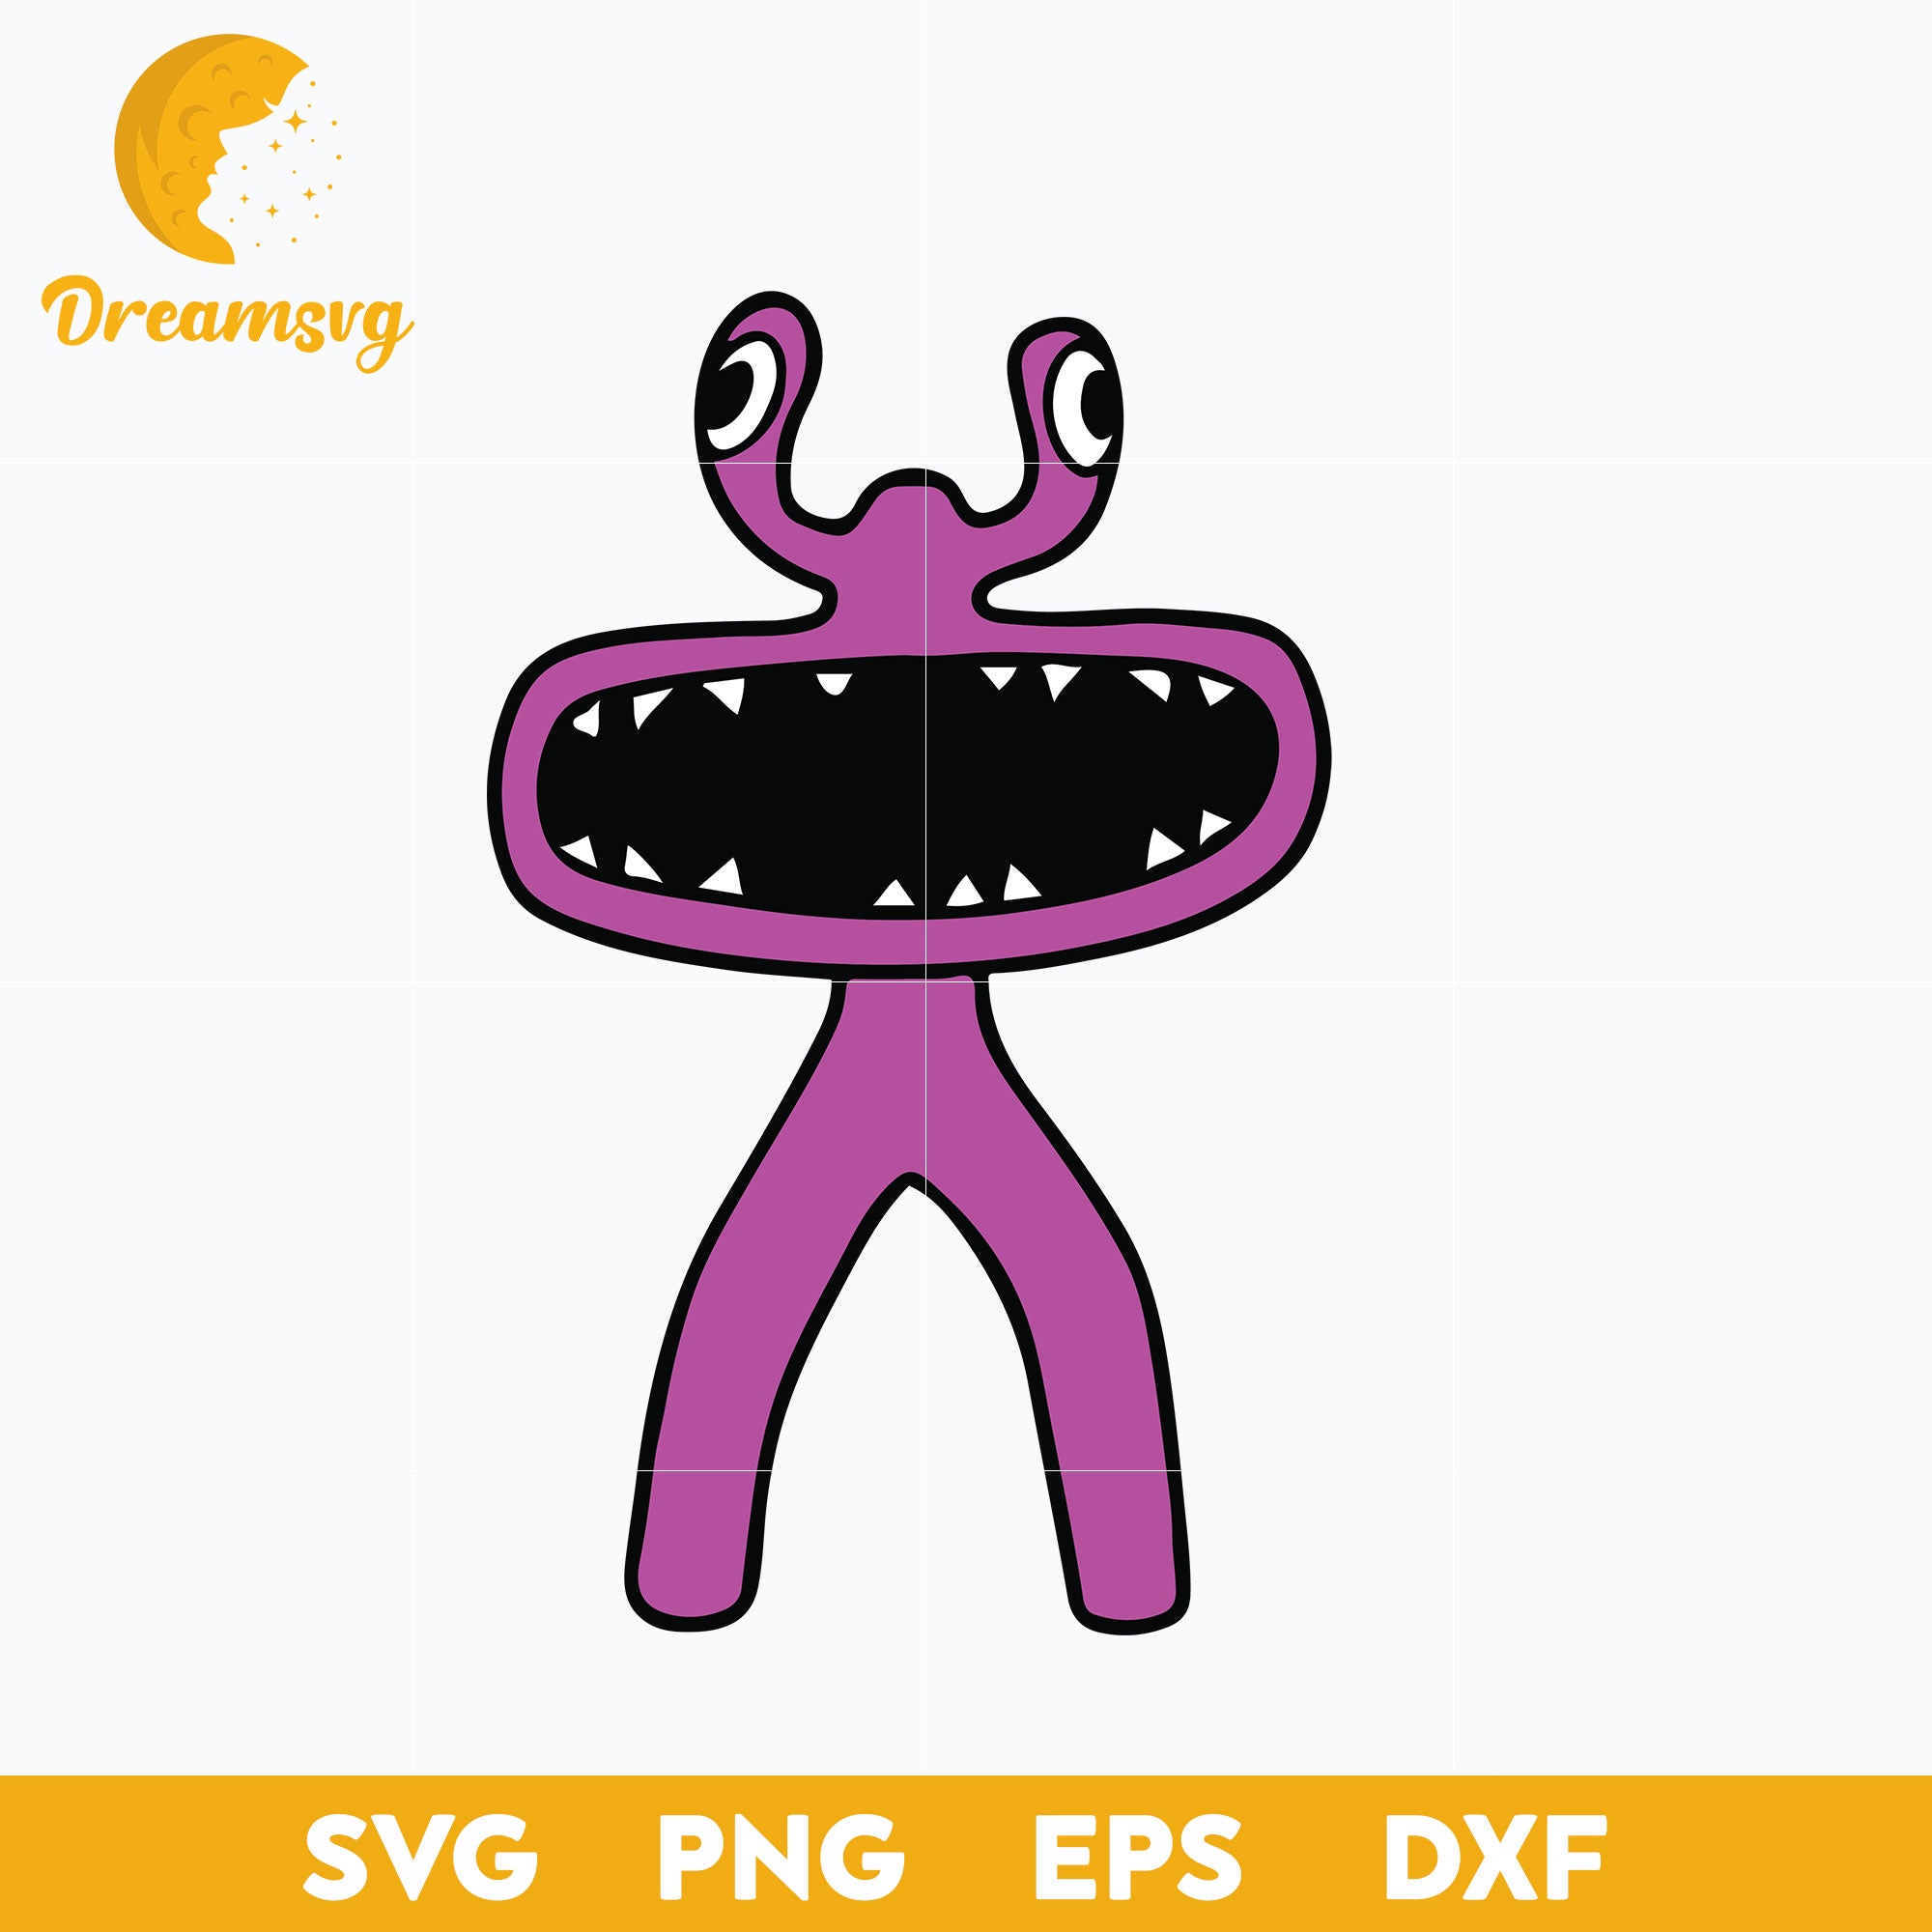 Orange from Rainbow Friends SVG, Funny SVG, PNG DXF EPS Digital File.